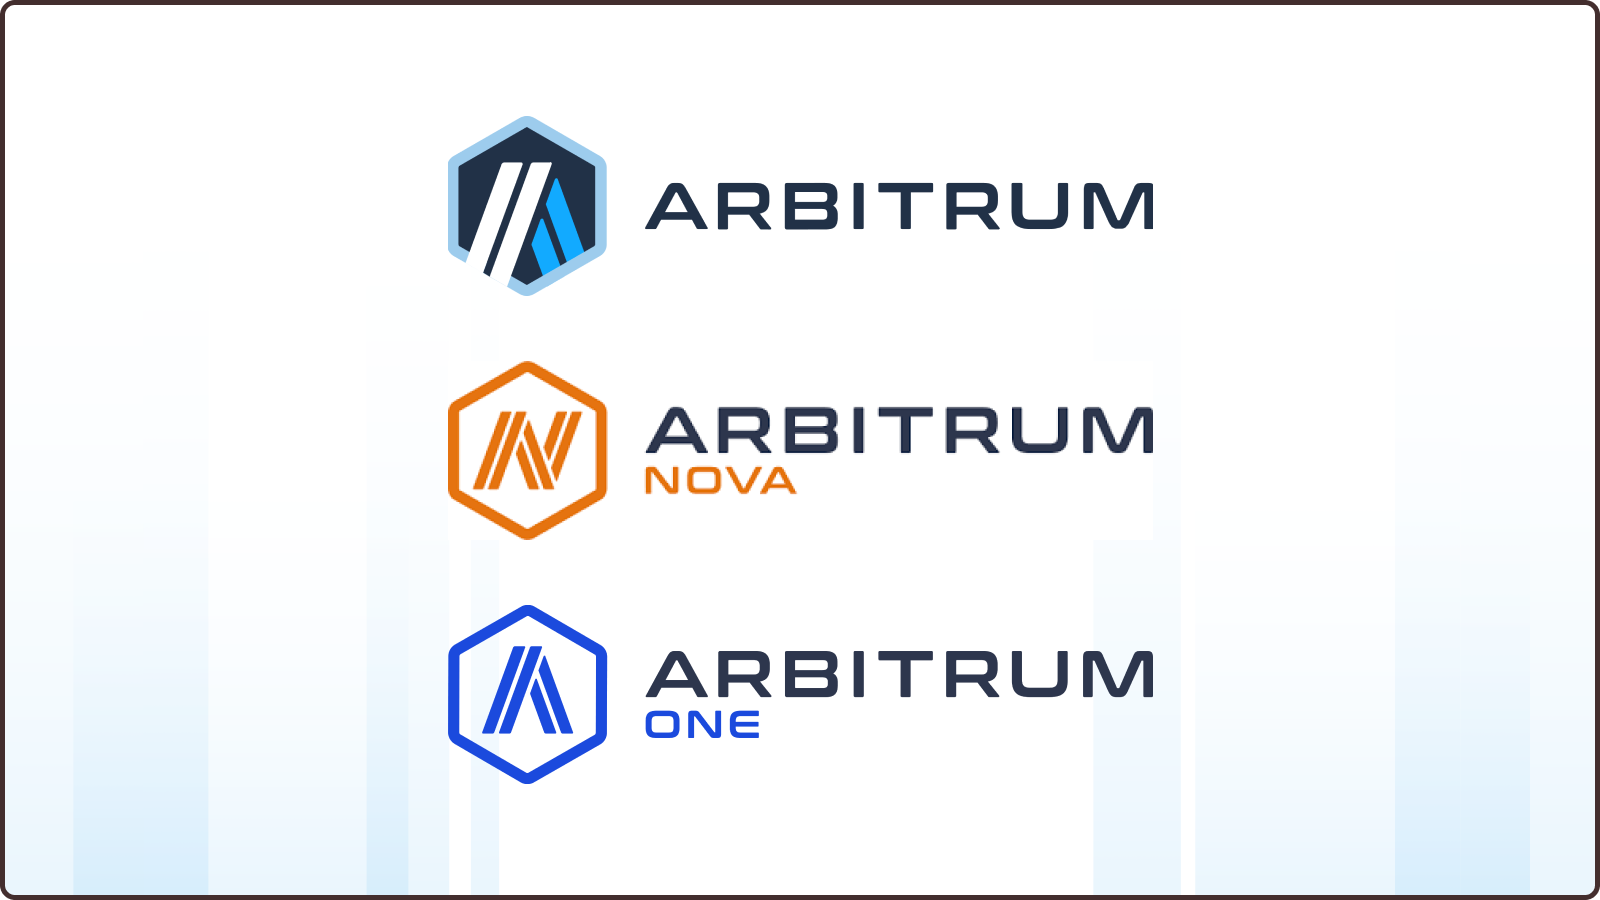 Arbitrum Ecosystem: One, Nitro, and Nova